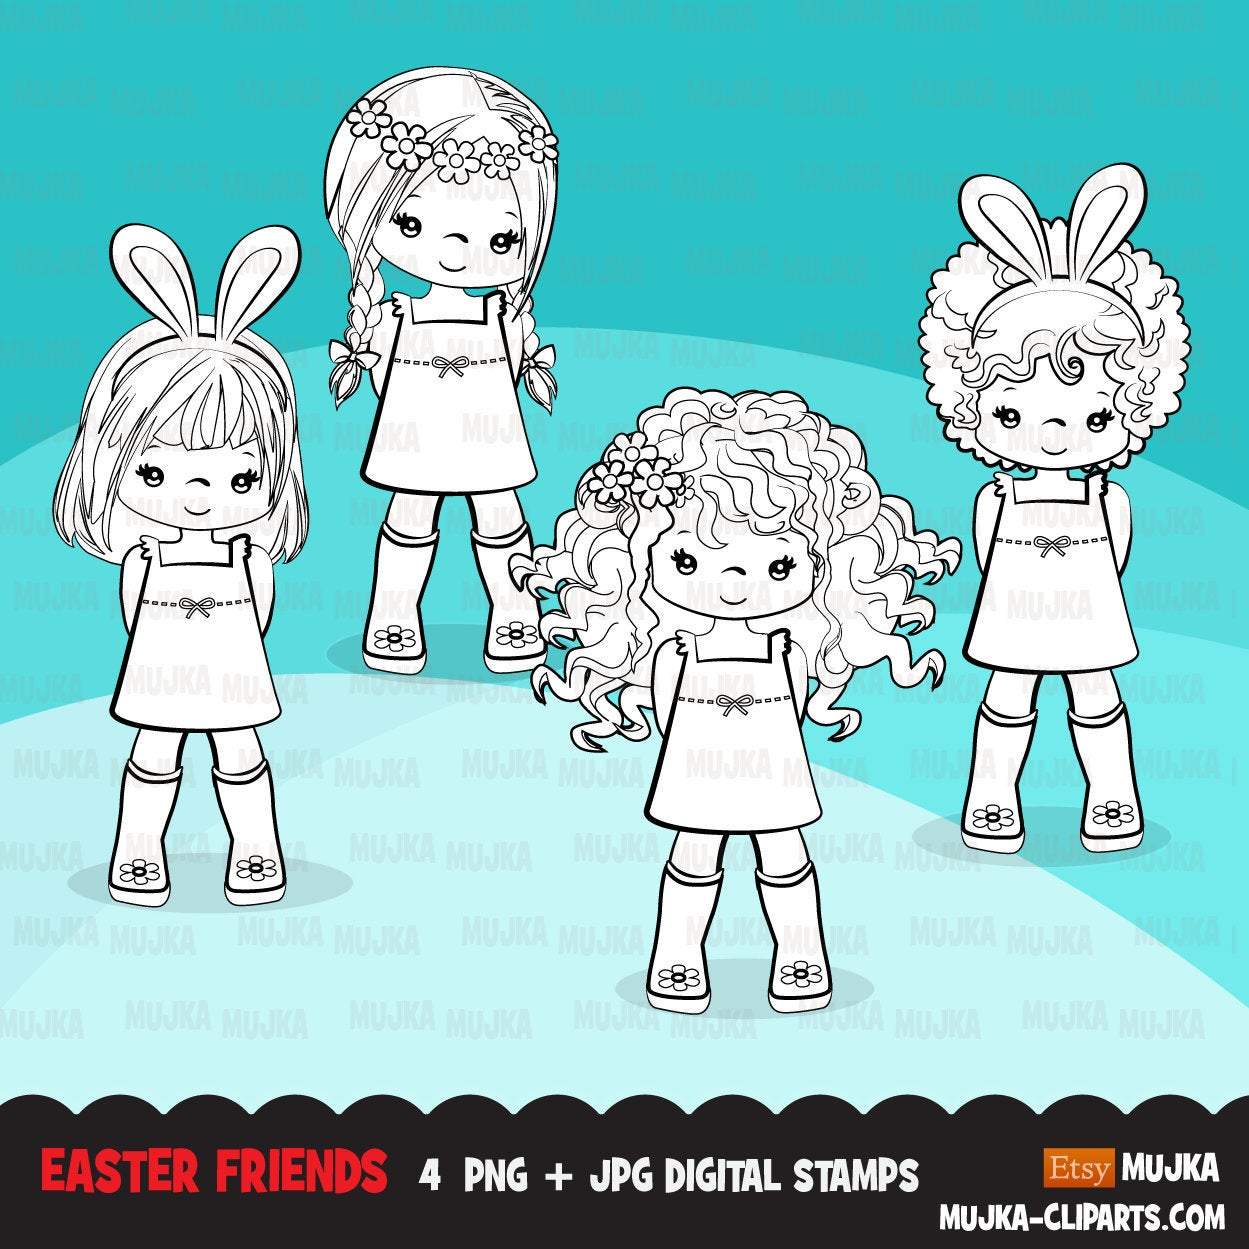 Easter Digital stamps, black & white Easter girls graphics, egg hunt, bunny ears, best friends, coloring book art outline clipart